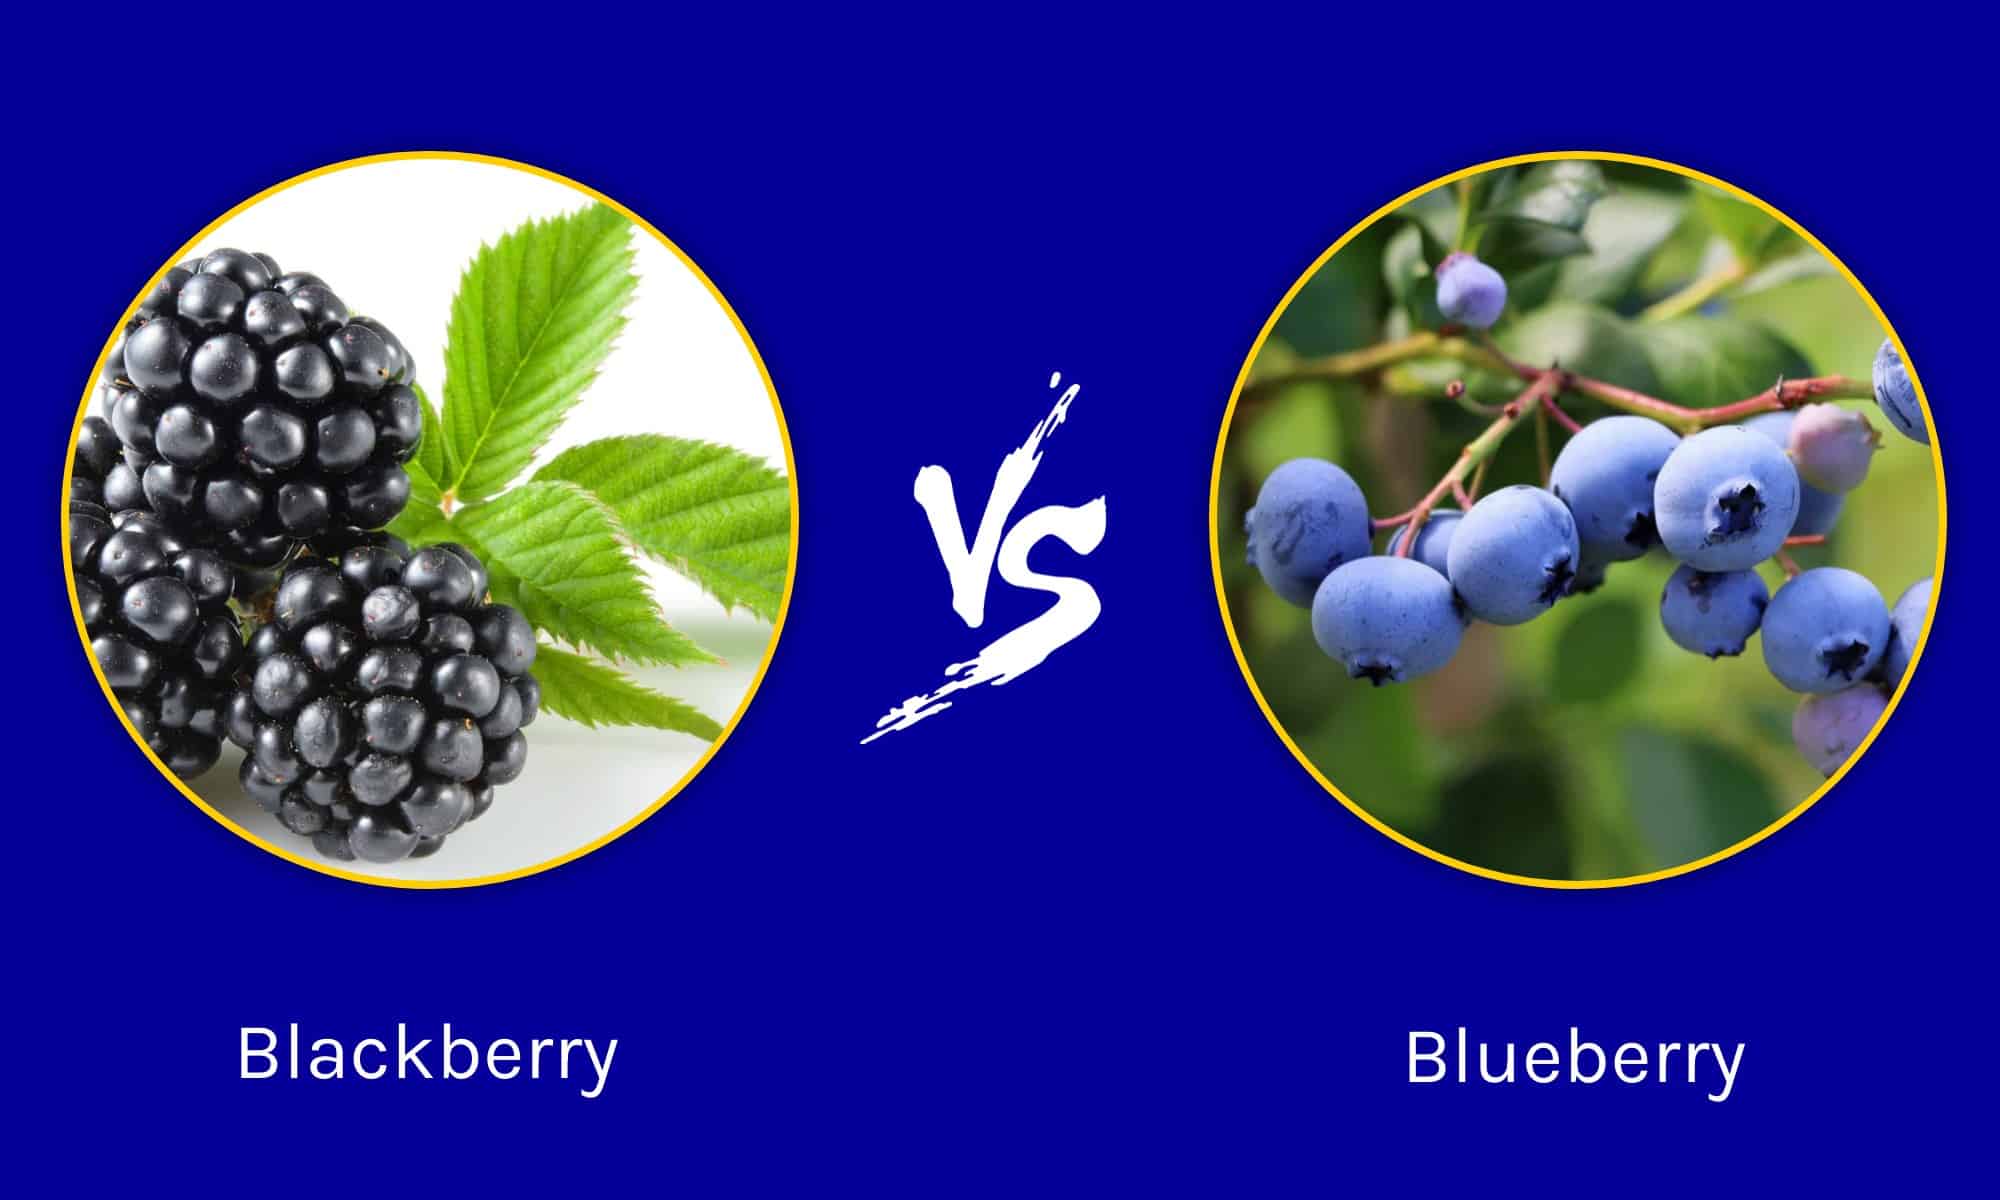 Image of Blueberries and blackberries plants